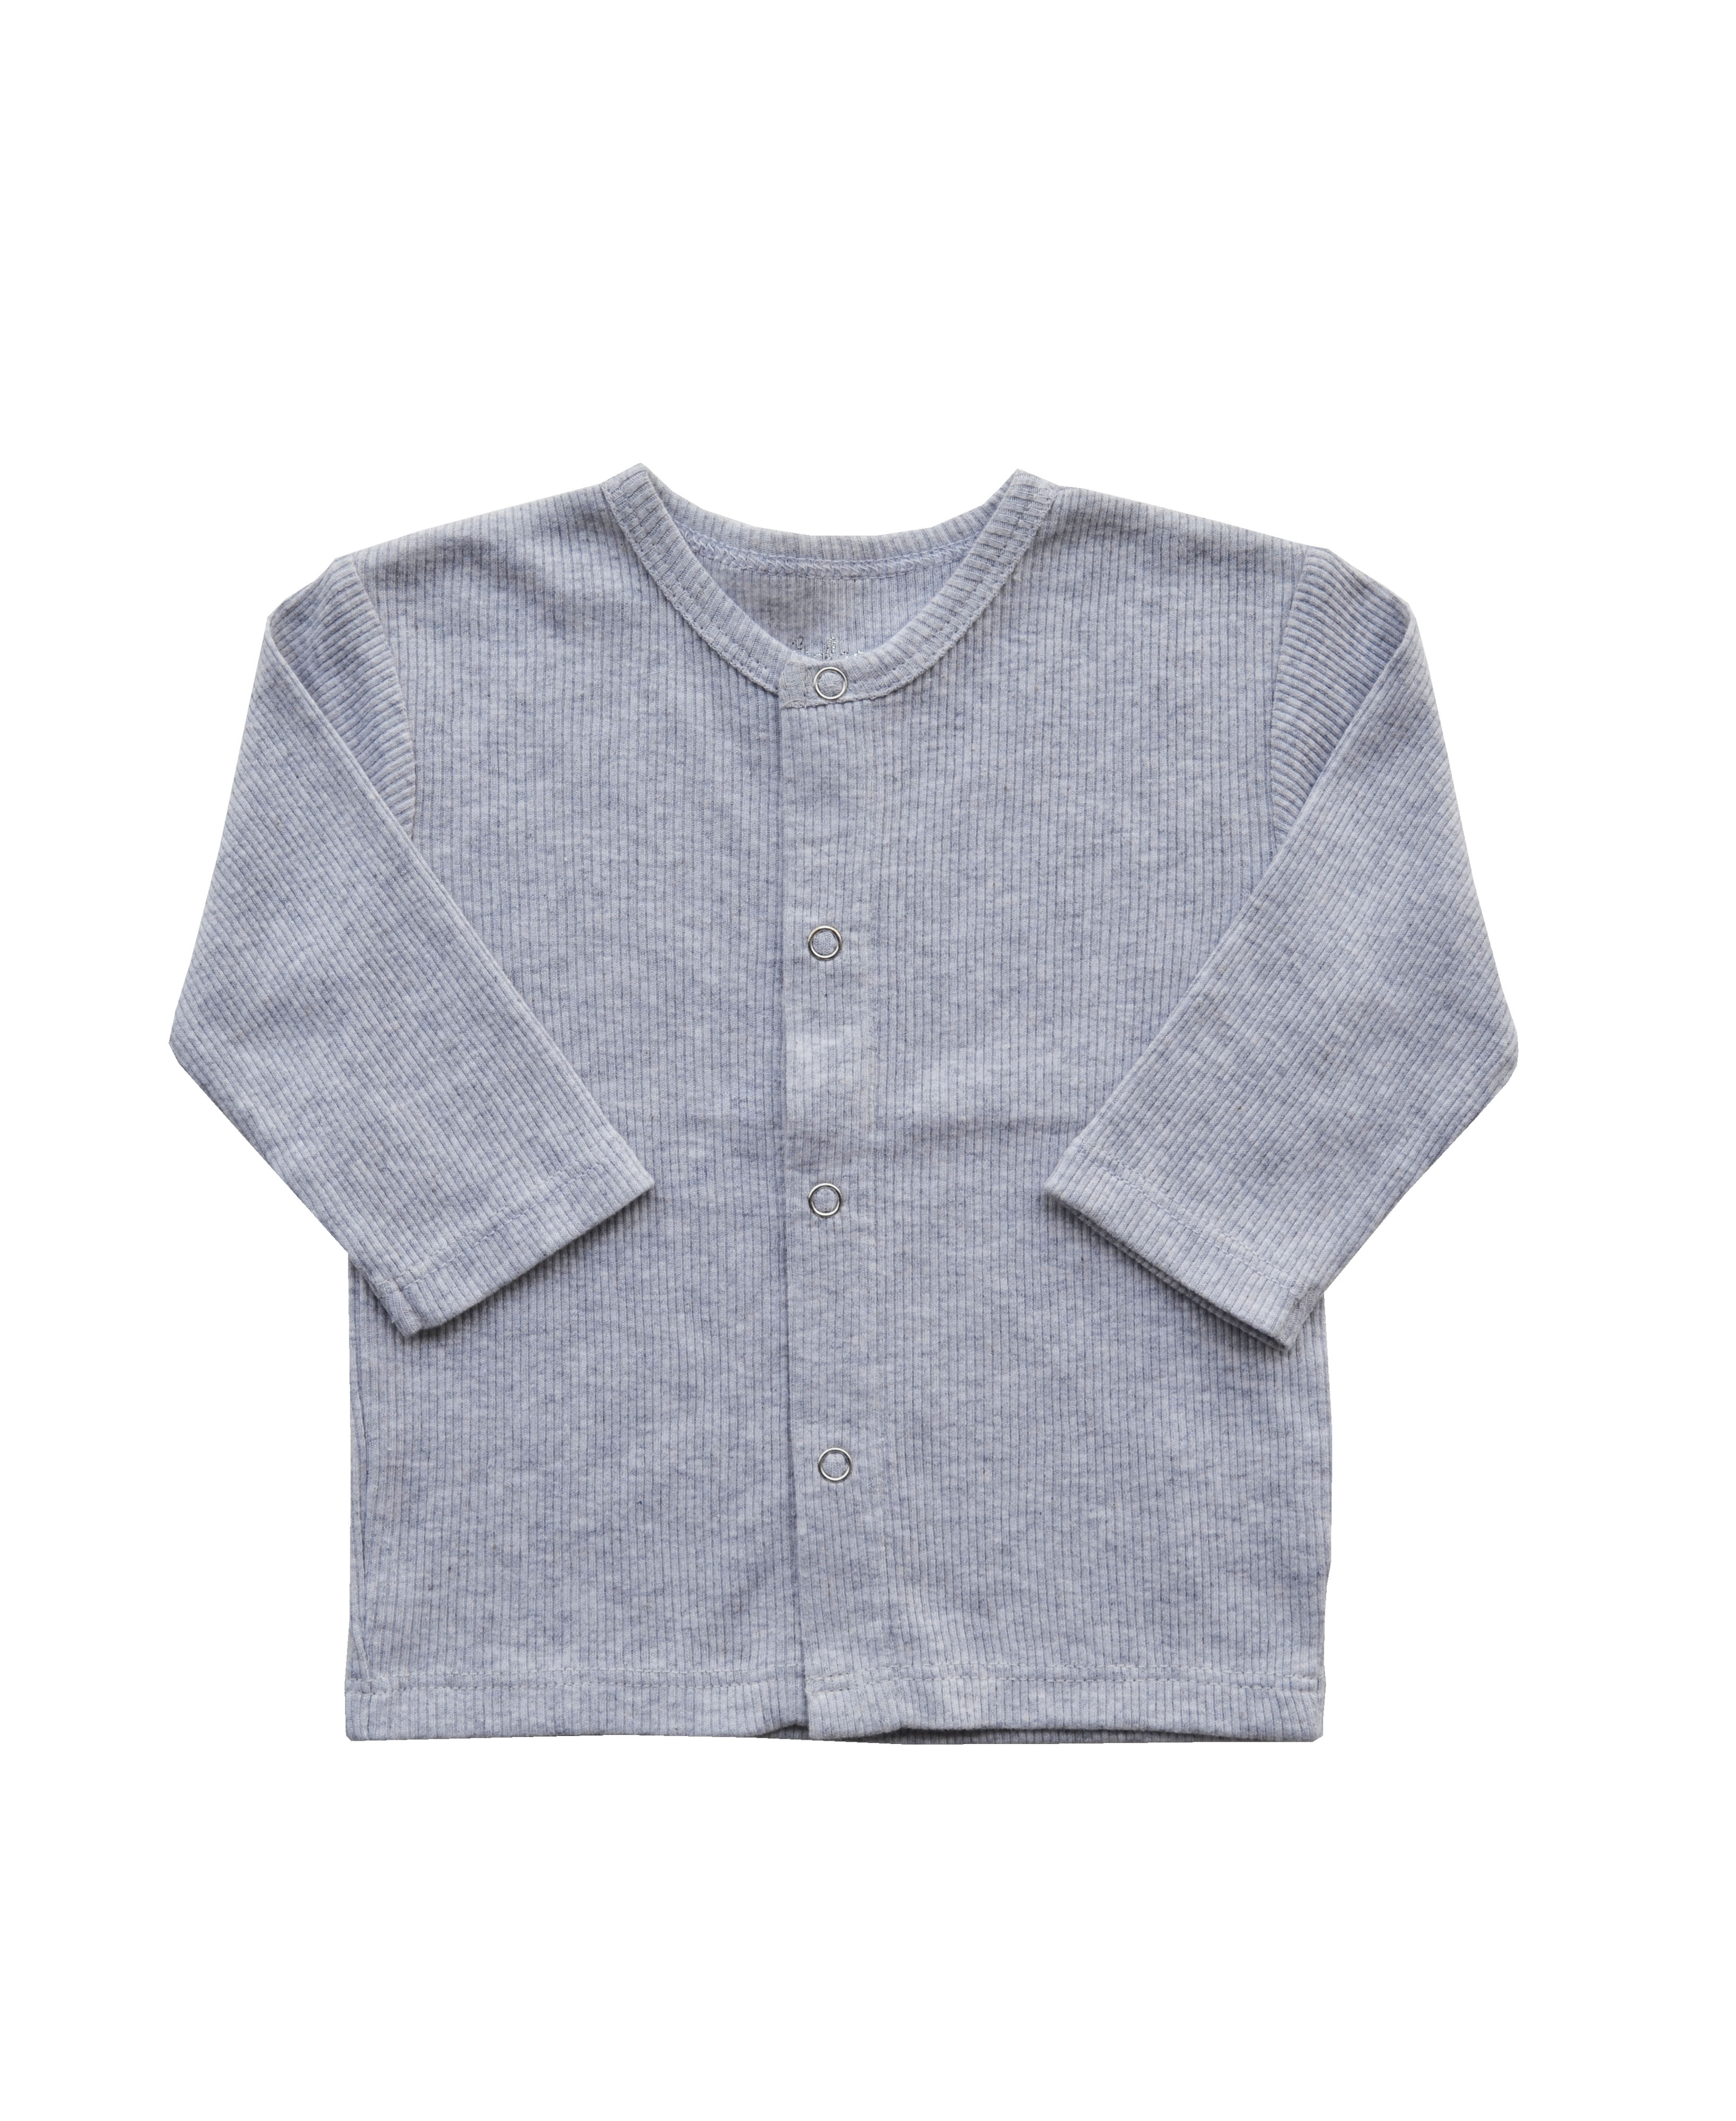 Grey Melange Full Sleeves Jhabla (100% Cotton Rib)